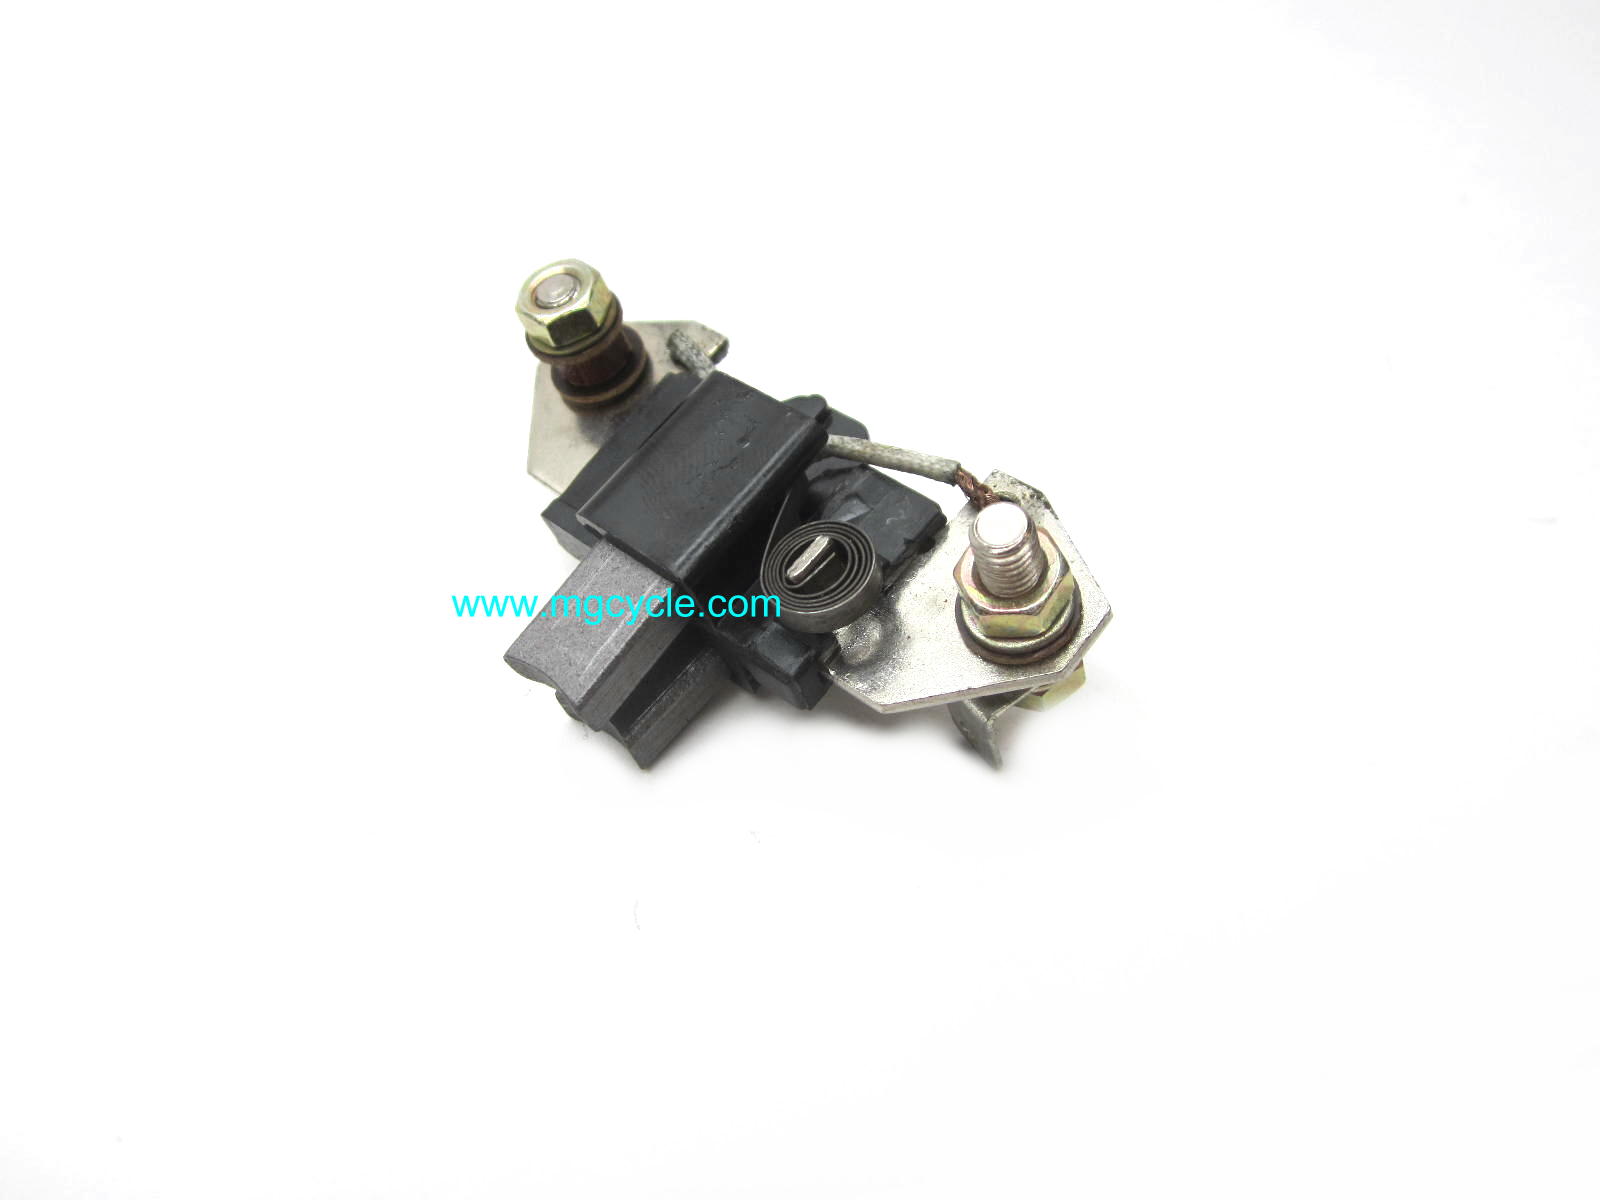 Alternator brush holder for Bosch alternators GU17712452 - Click Image to Close